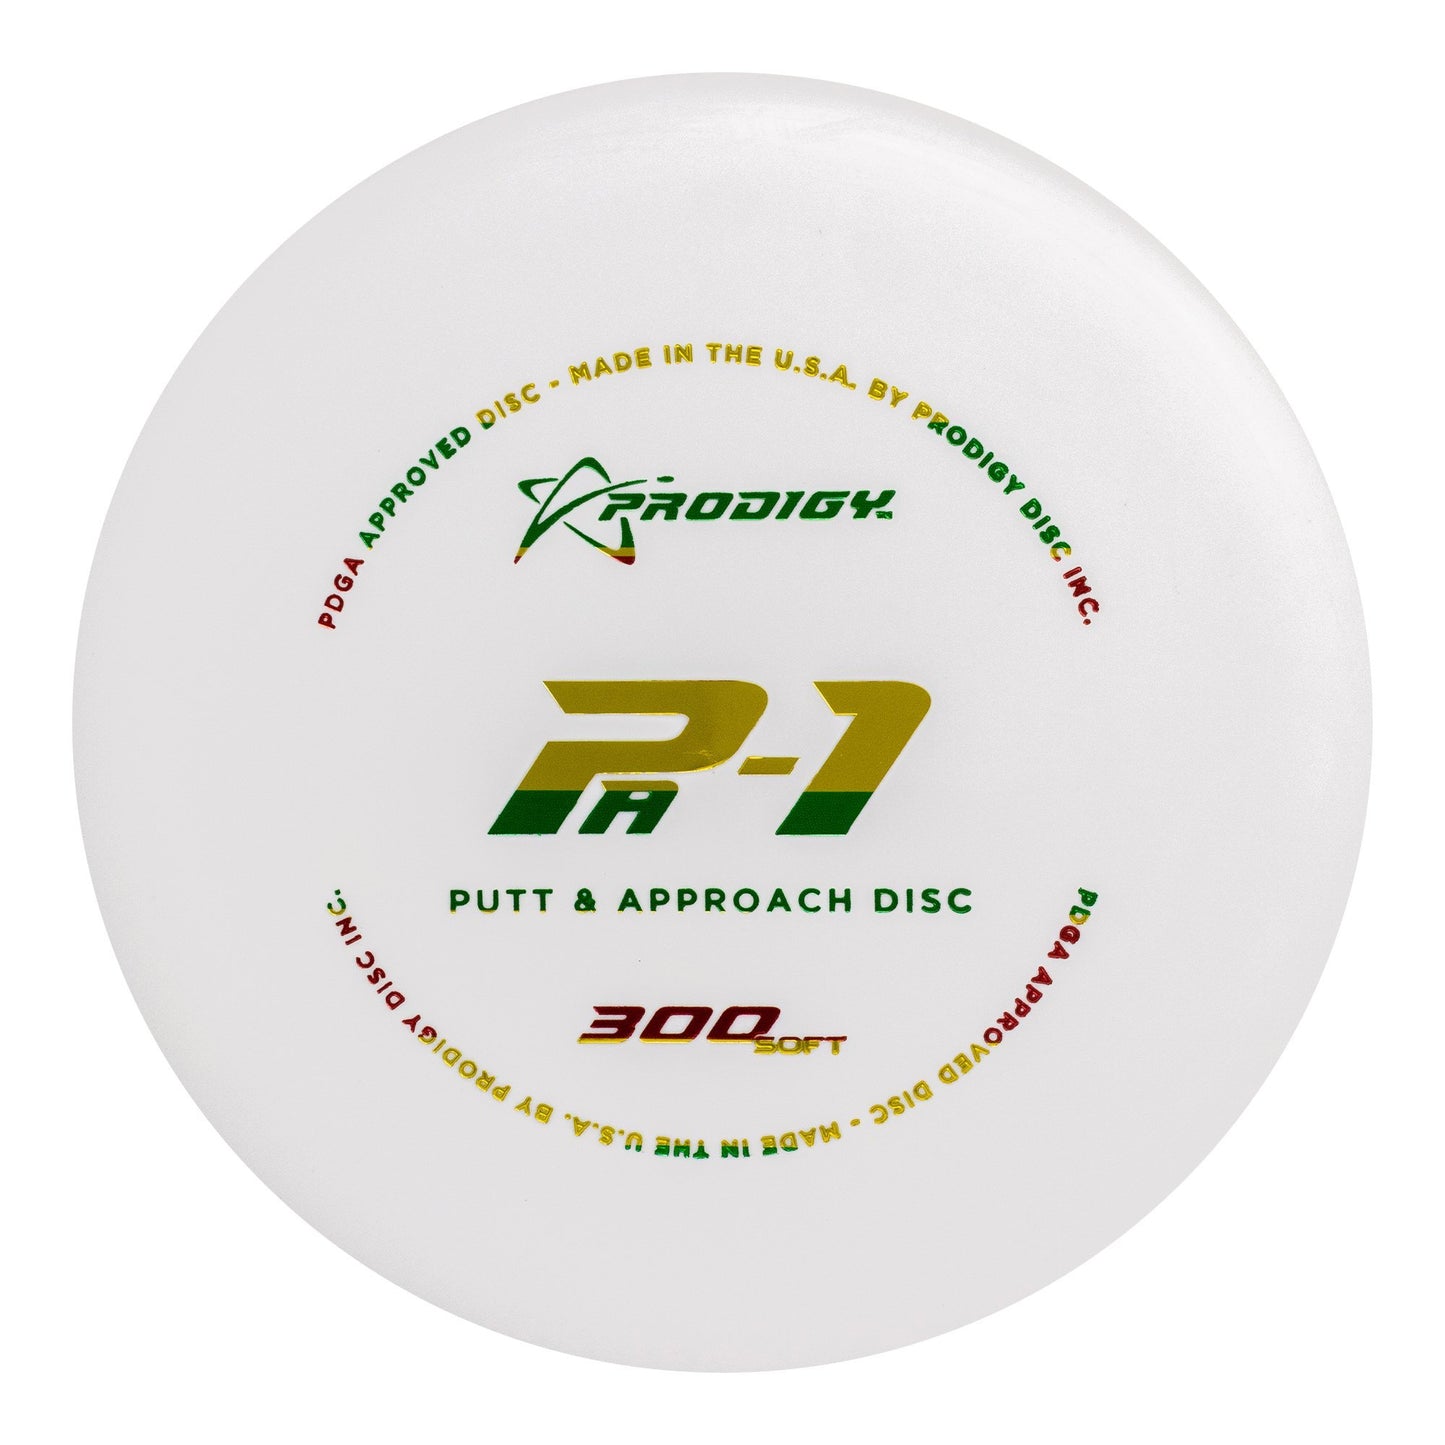 Prodigy PA-1 Putt & Approach Disc - 300 Soft Plastic